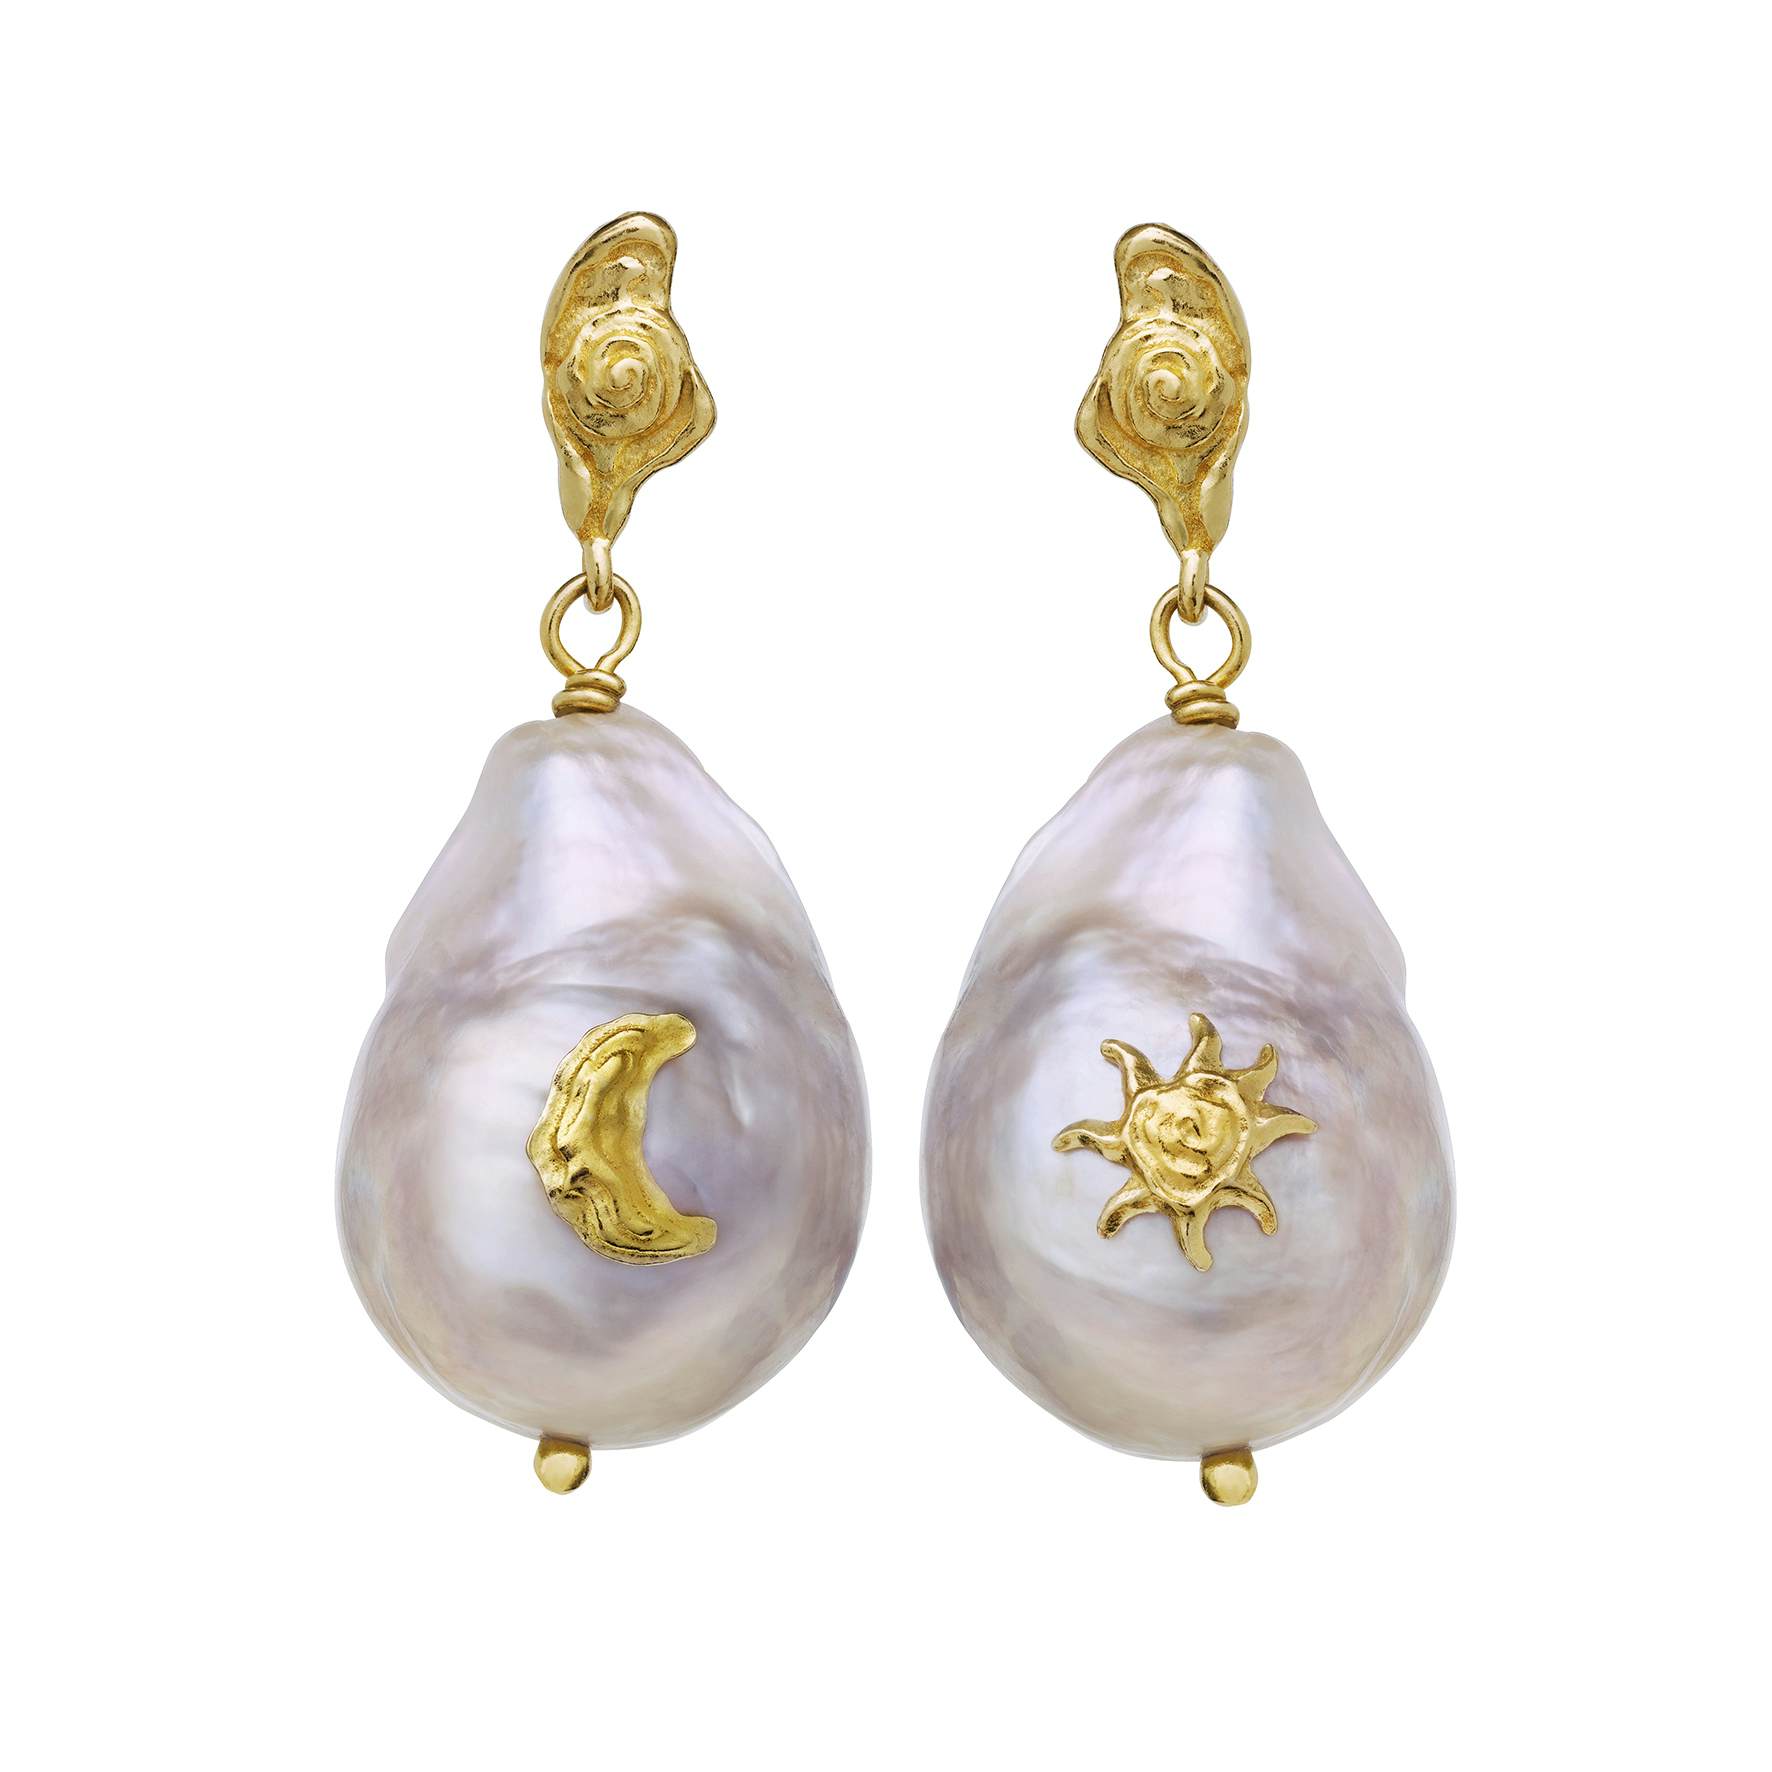 Claire Earrings von Maanesten in Vergoldet-Silber Sterling 925|Freshwater Pearl